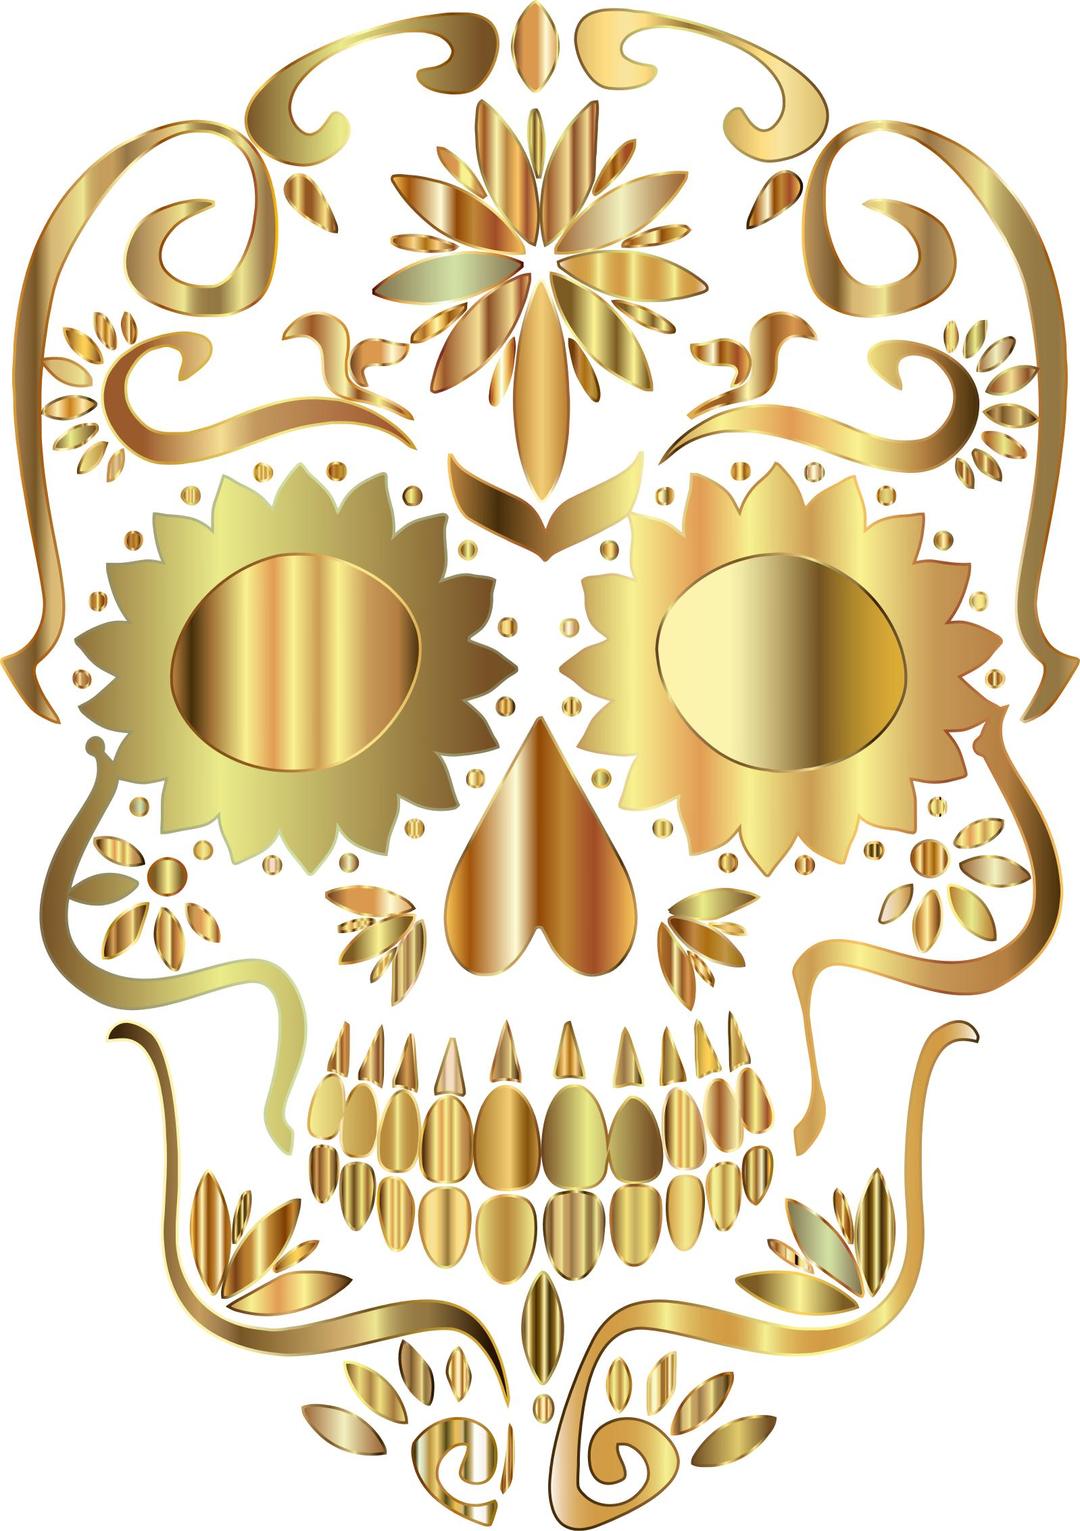 Golden Sugar Skull Silhouette No Background png transparent